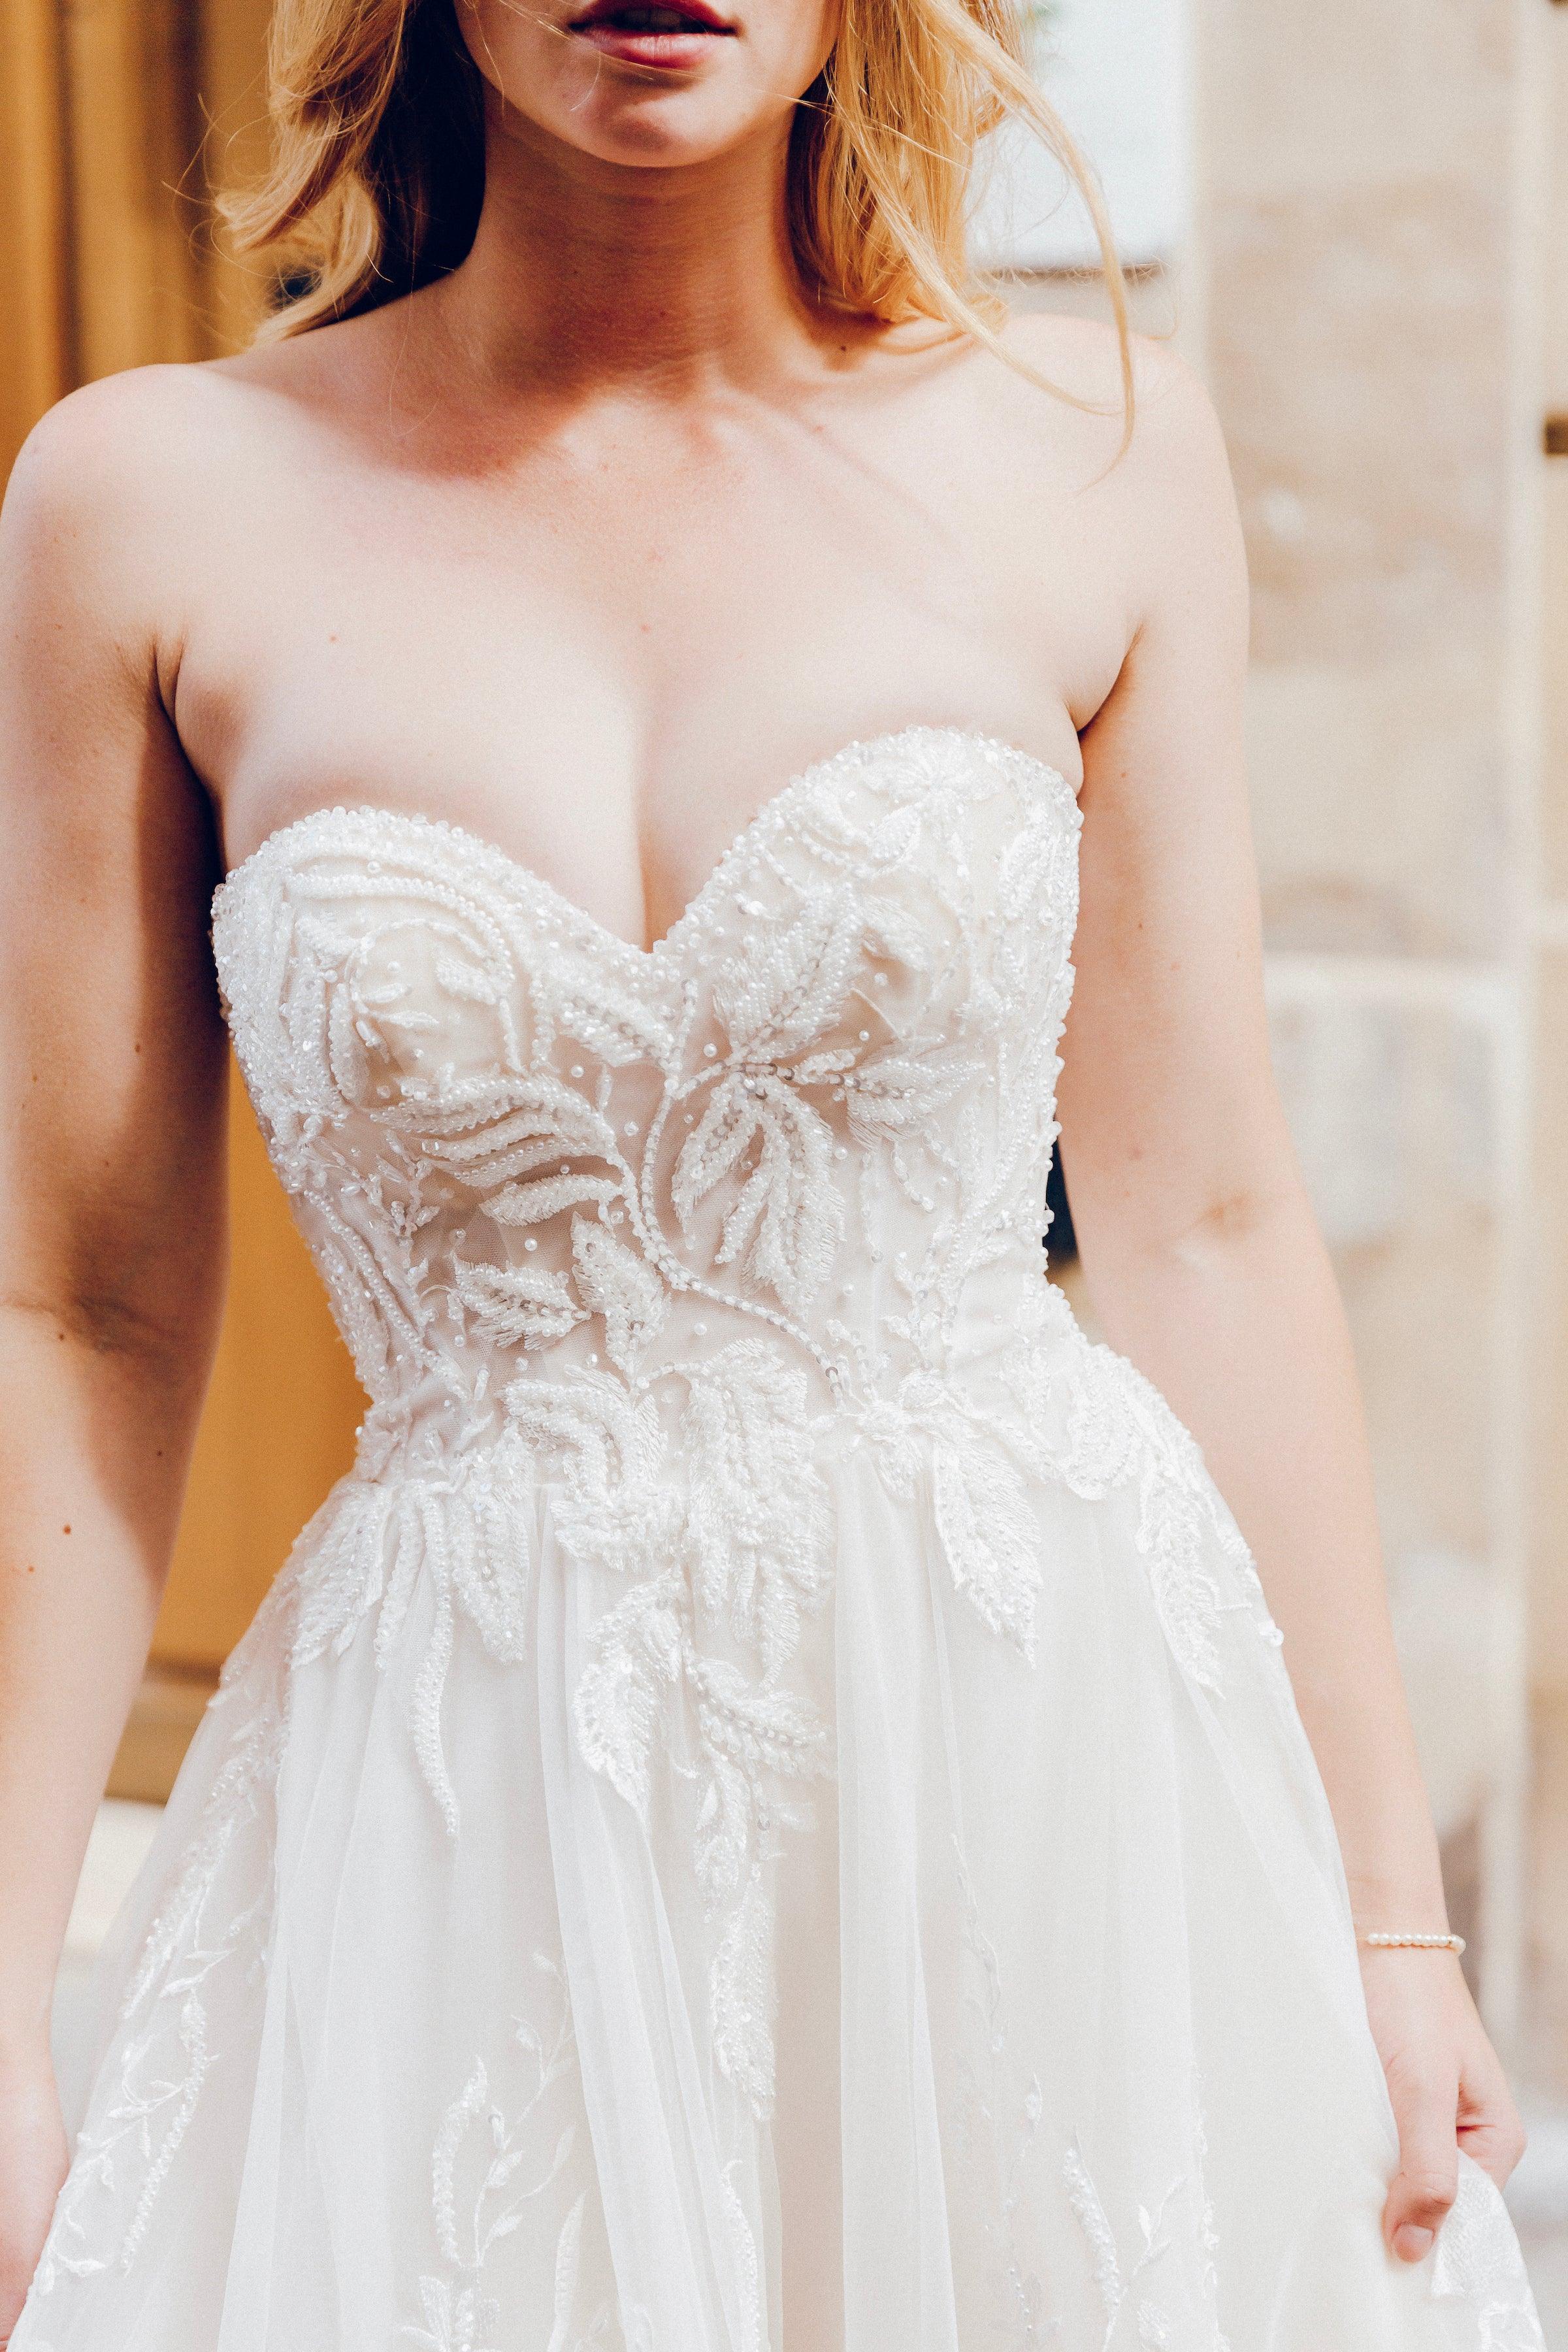 Strapless Wedding Dress | Audrey Hepburn Dress | Dare and Dazzle